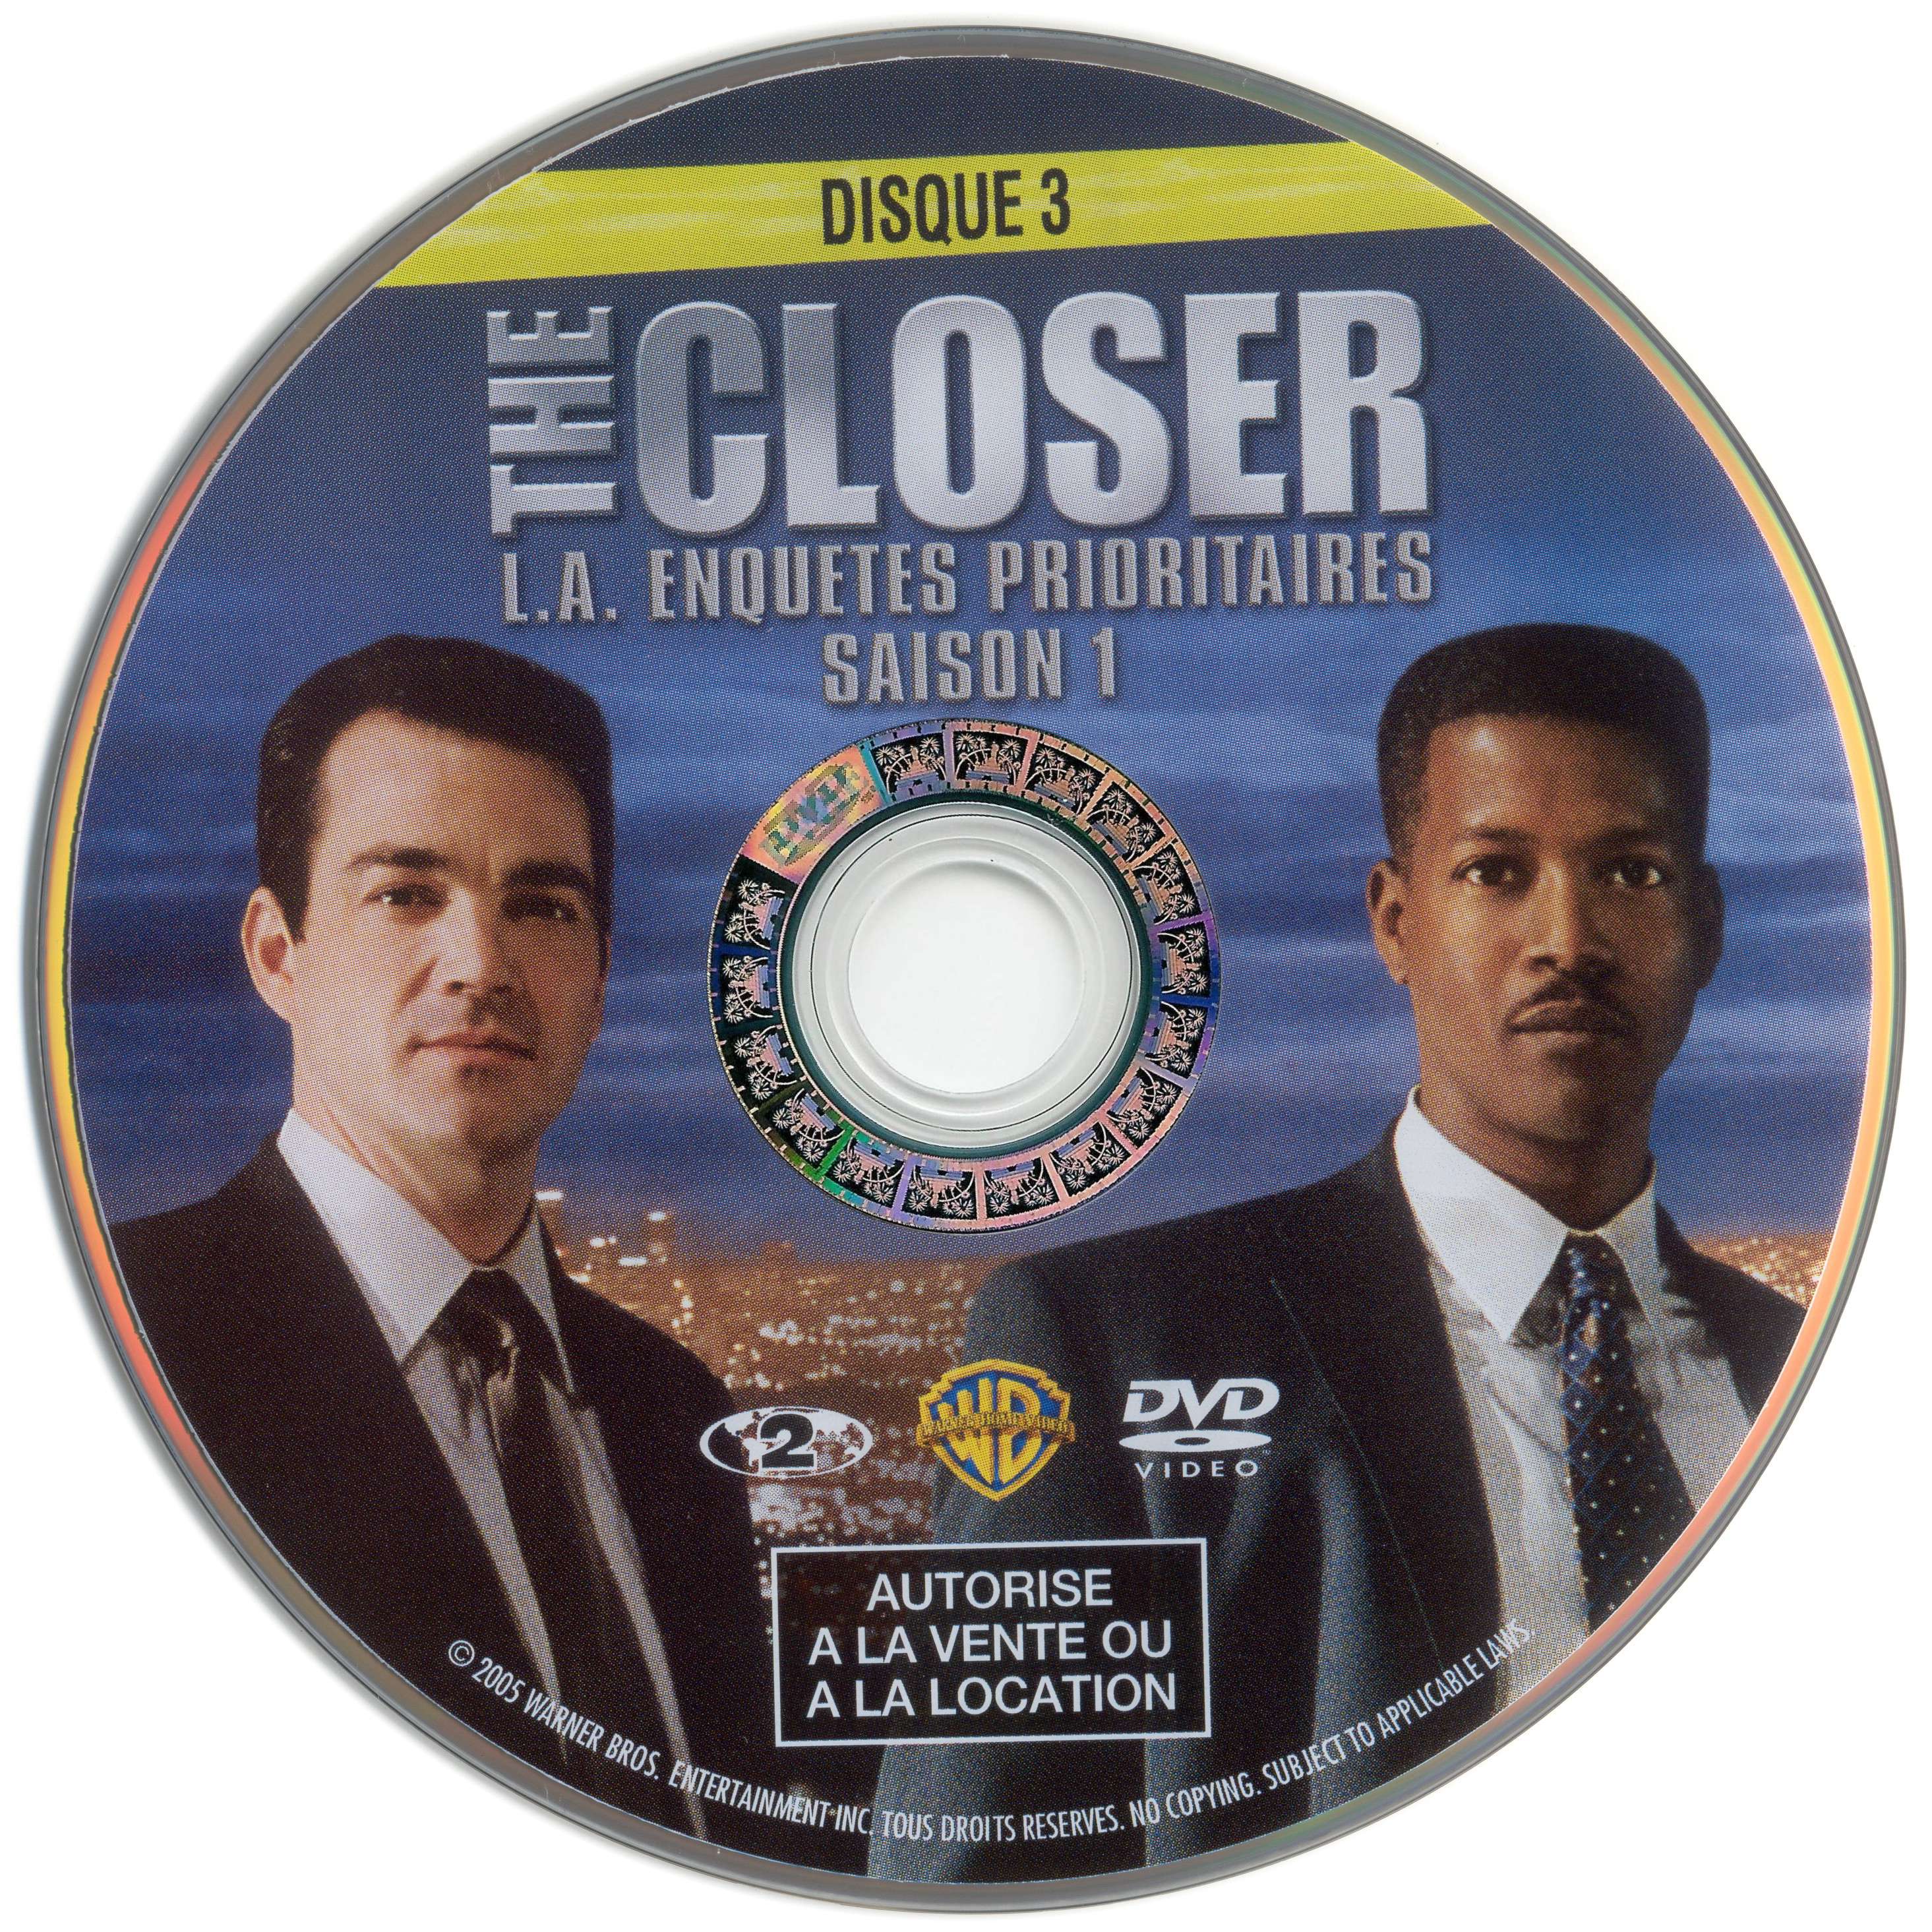 The closer Saison 1 DISC 3